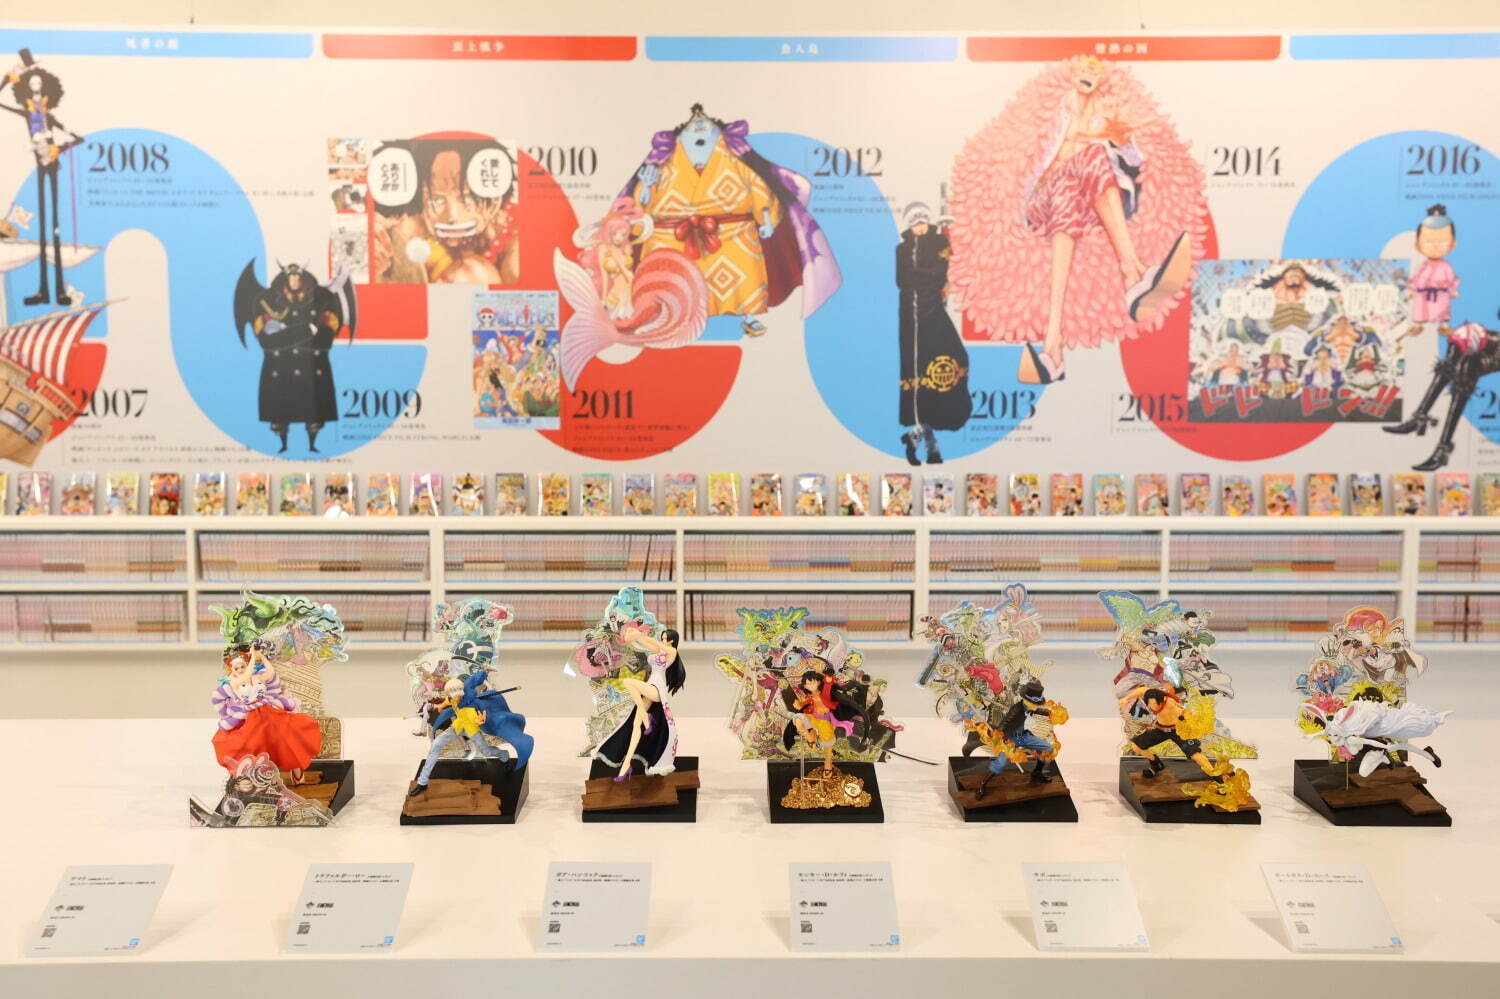 One Piece 100巻記念 巨大展示 超巨 大海賊百景 100巻立ち読み図書館 竹芝で ファッションプレス